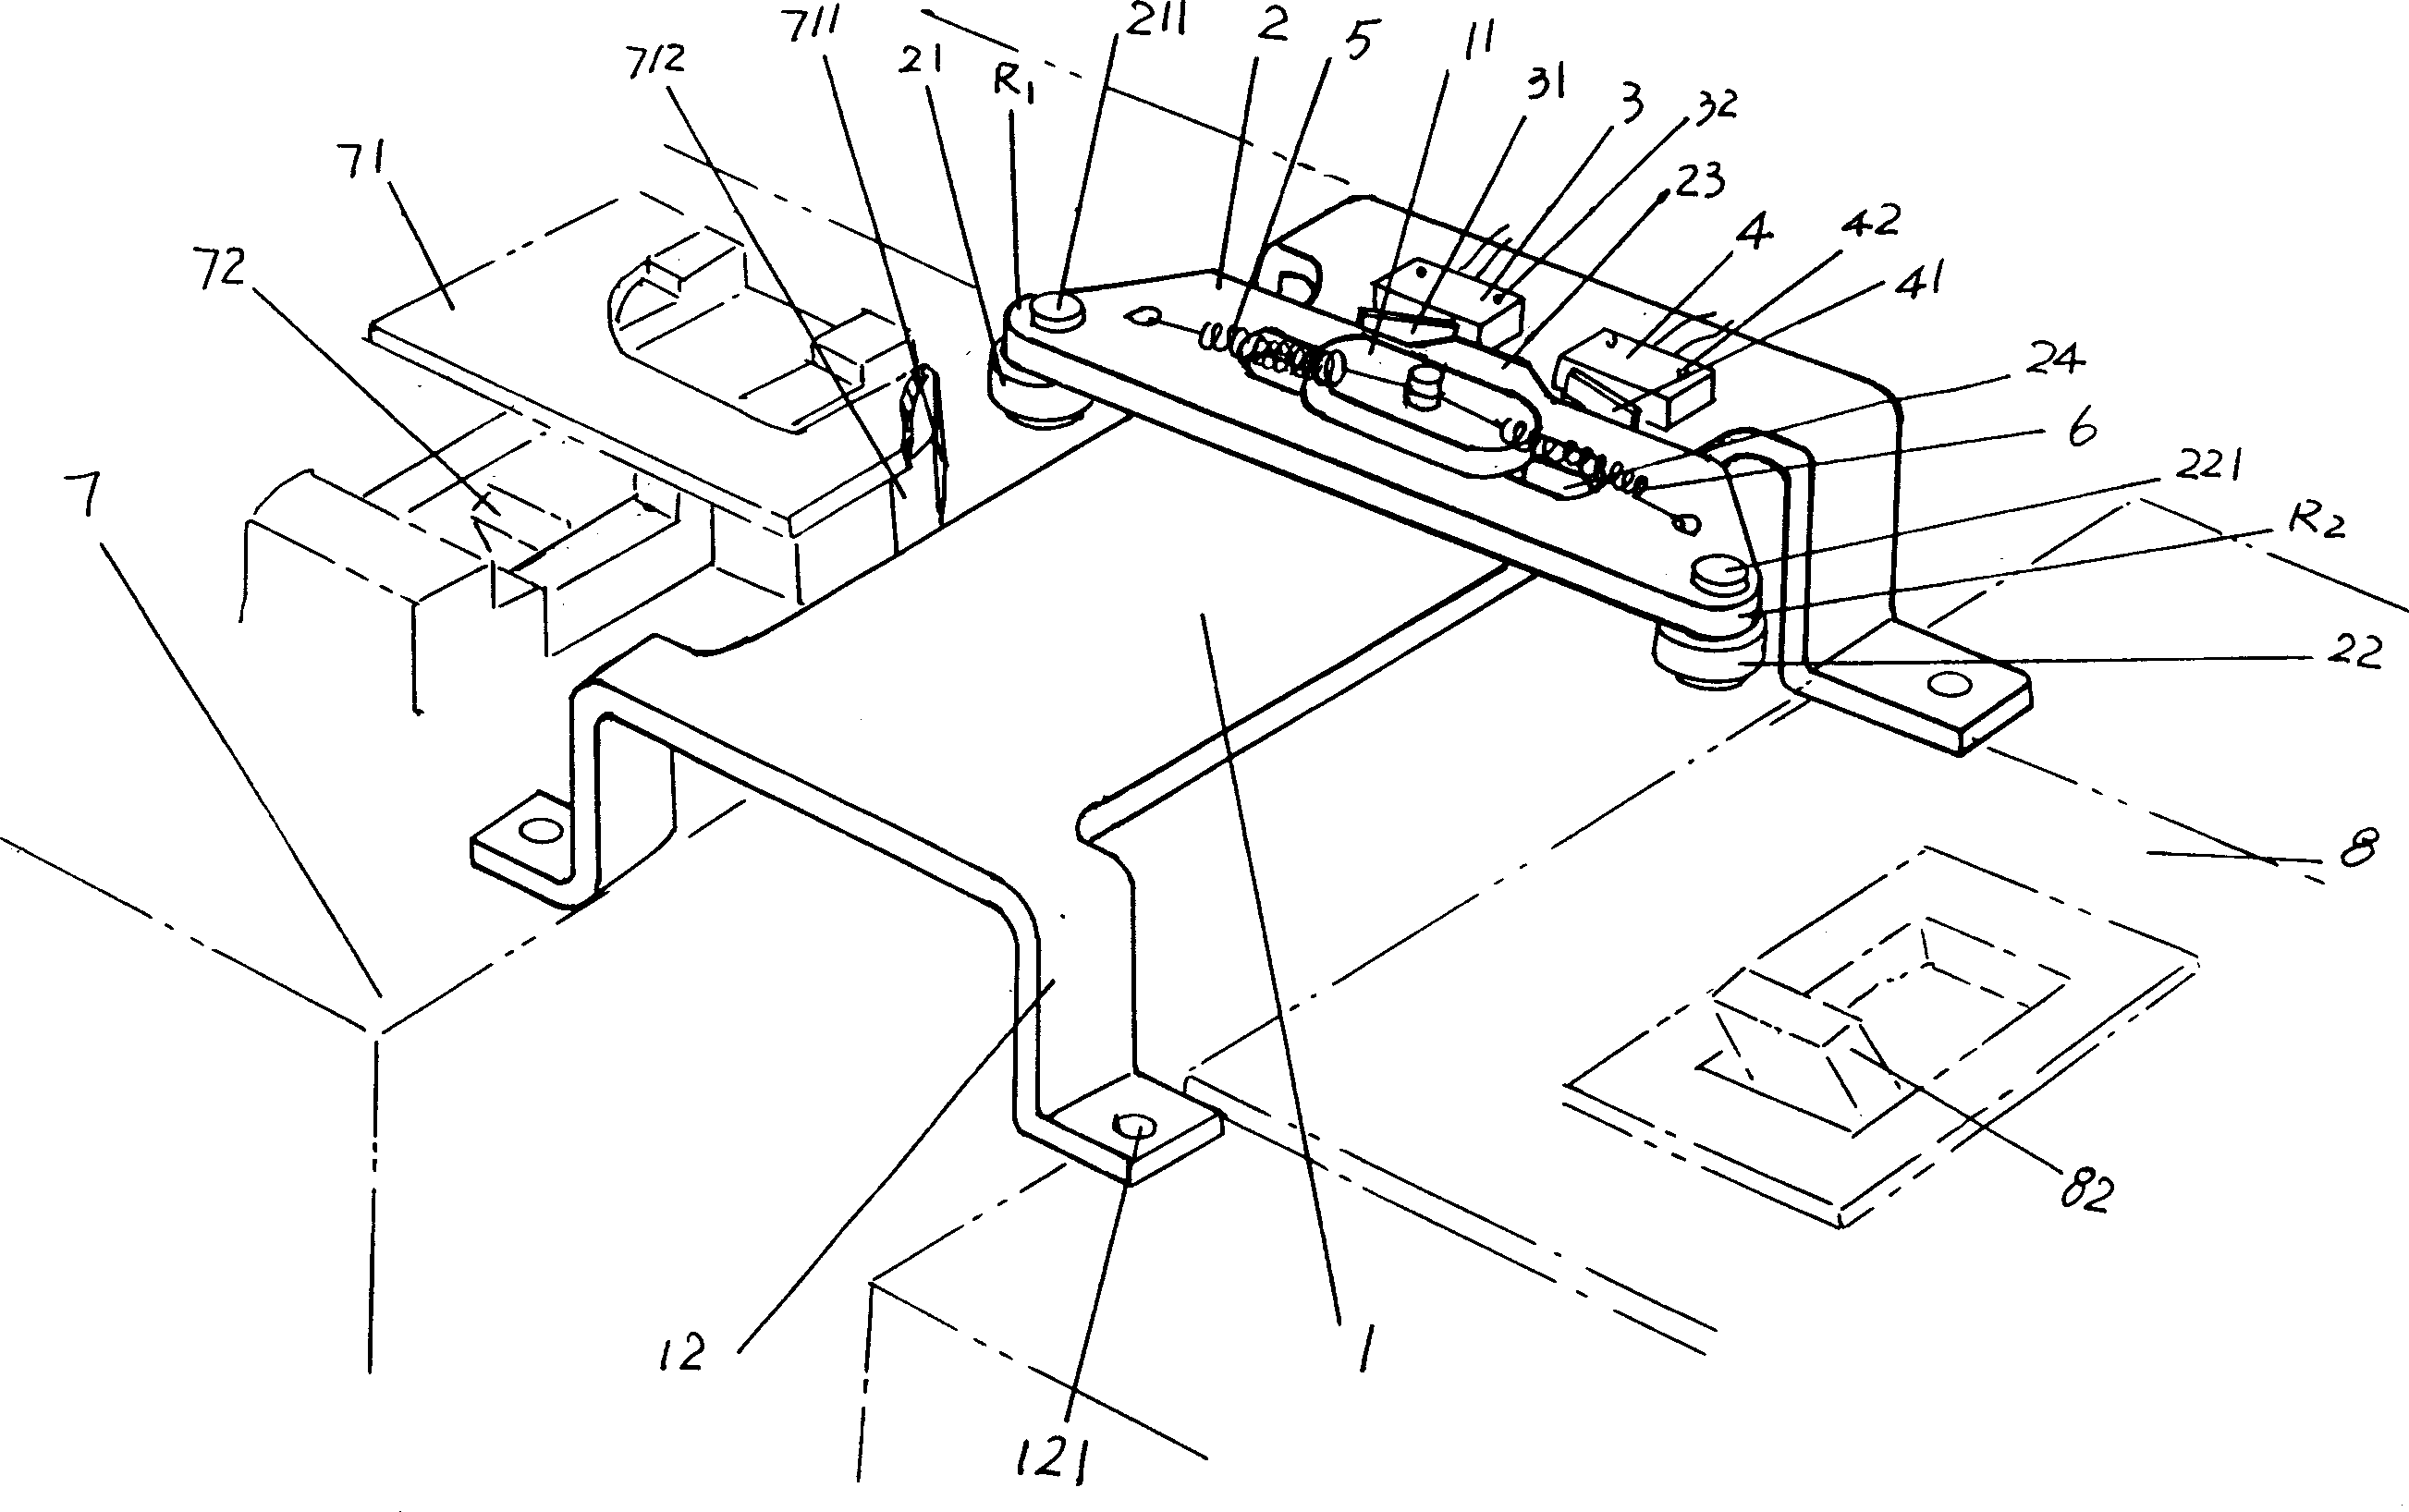 Circuit breaker interlocking device